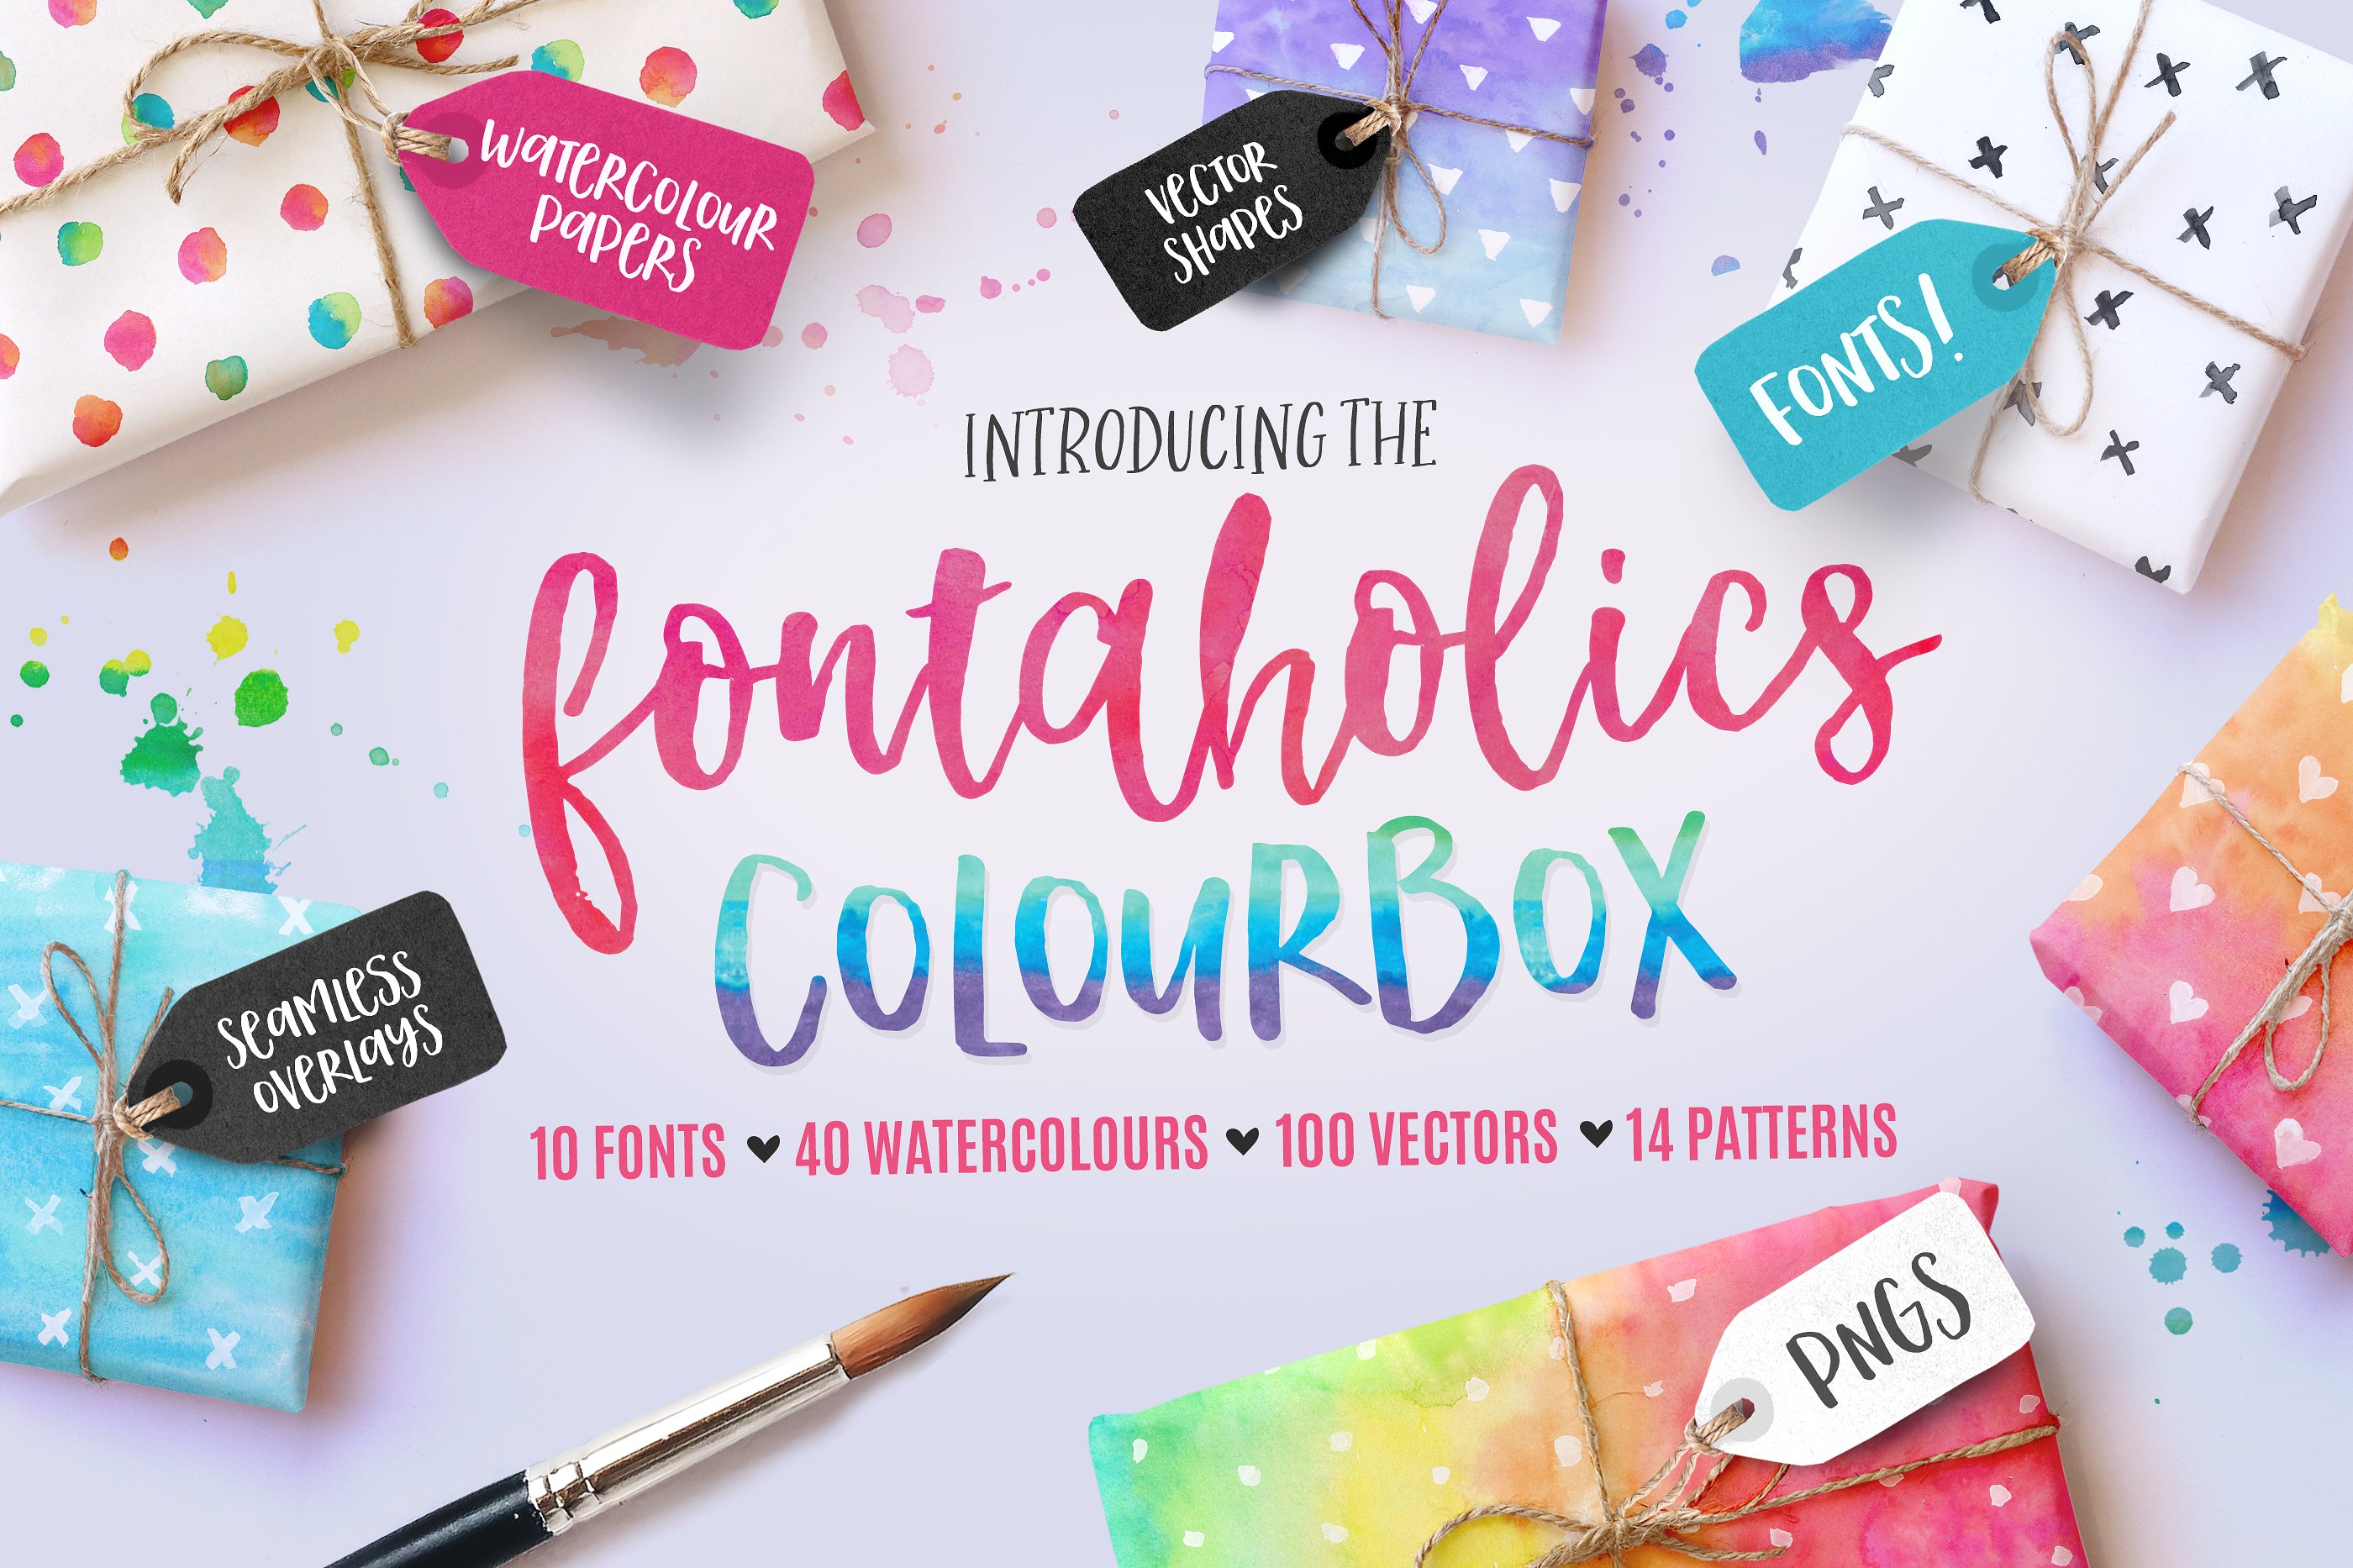 巨型高分辨率水彩图案集合 The Fontaholics Colourbox插图